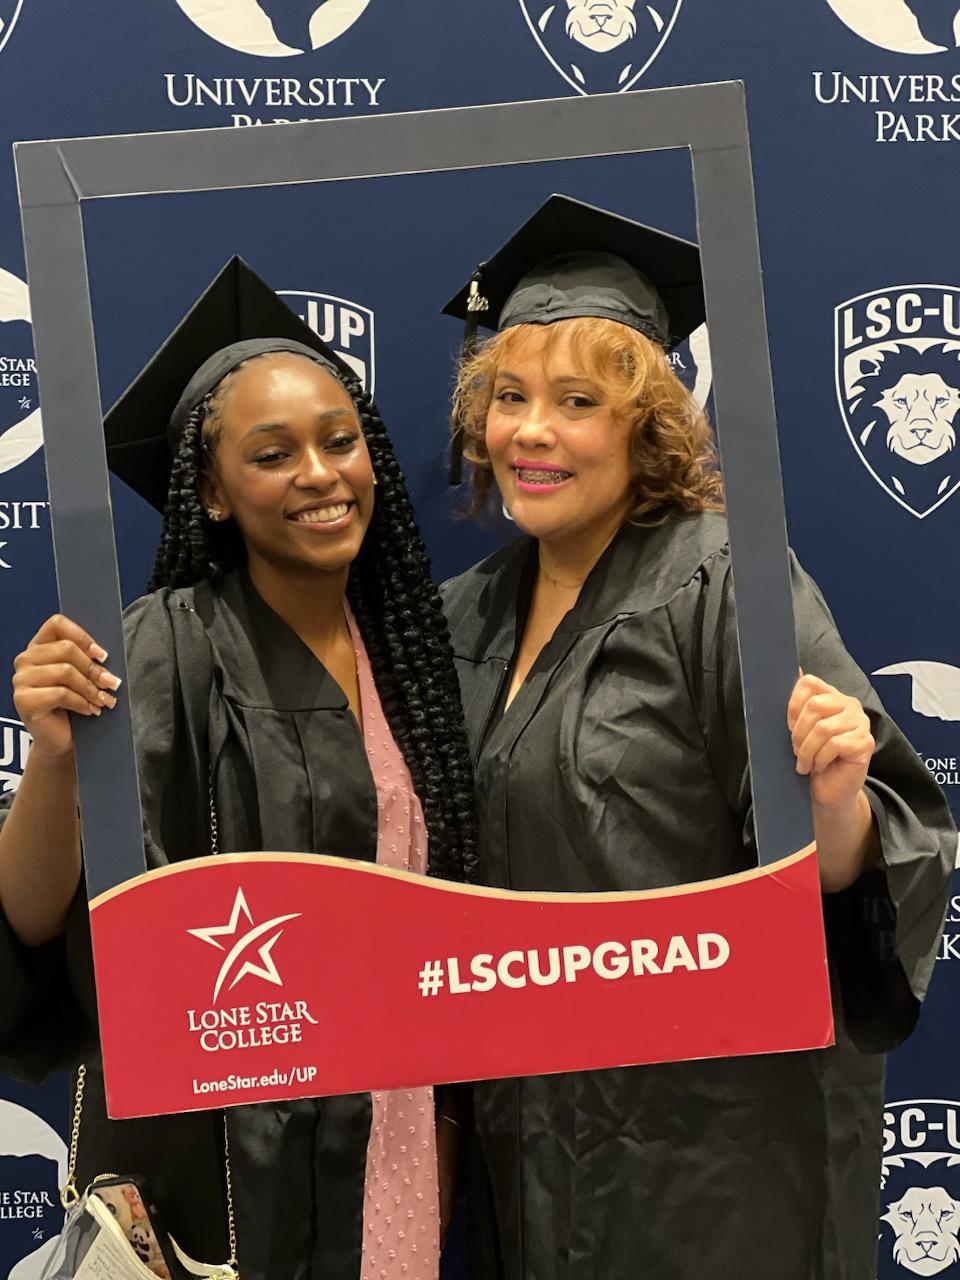 Lone Star College celebrates 2 momdaughter duos during graduation